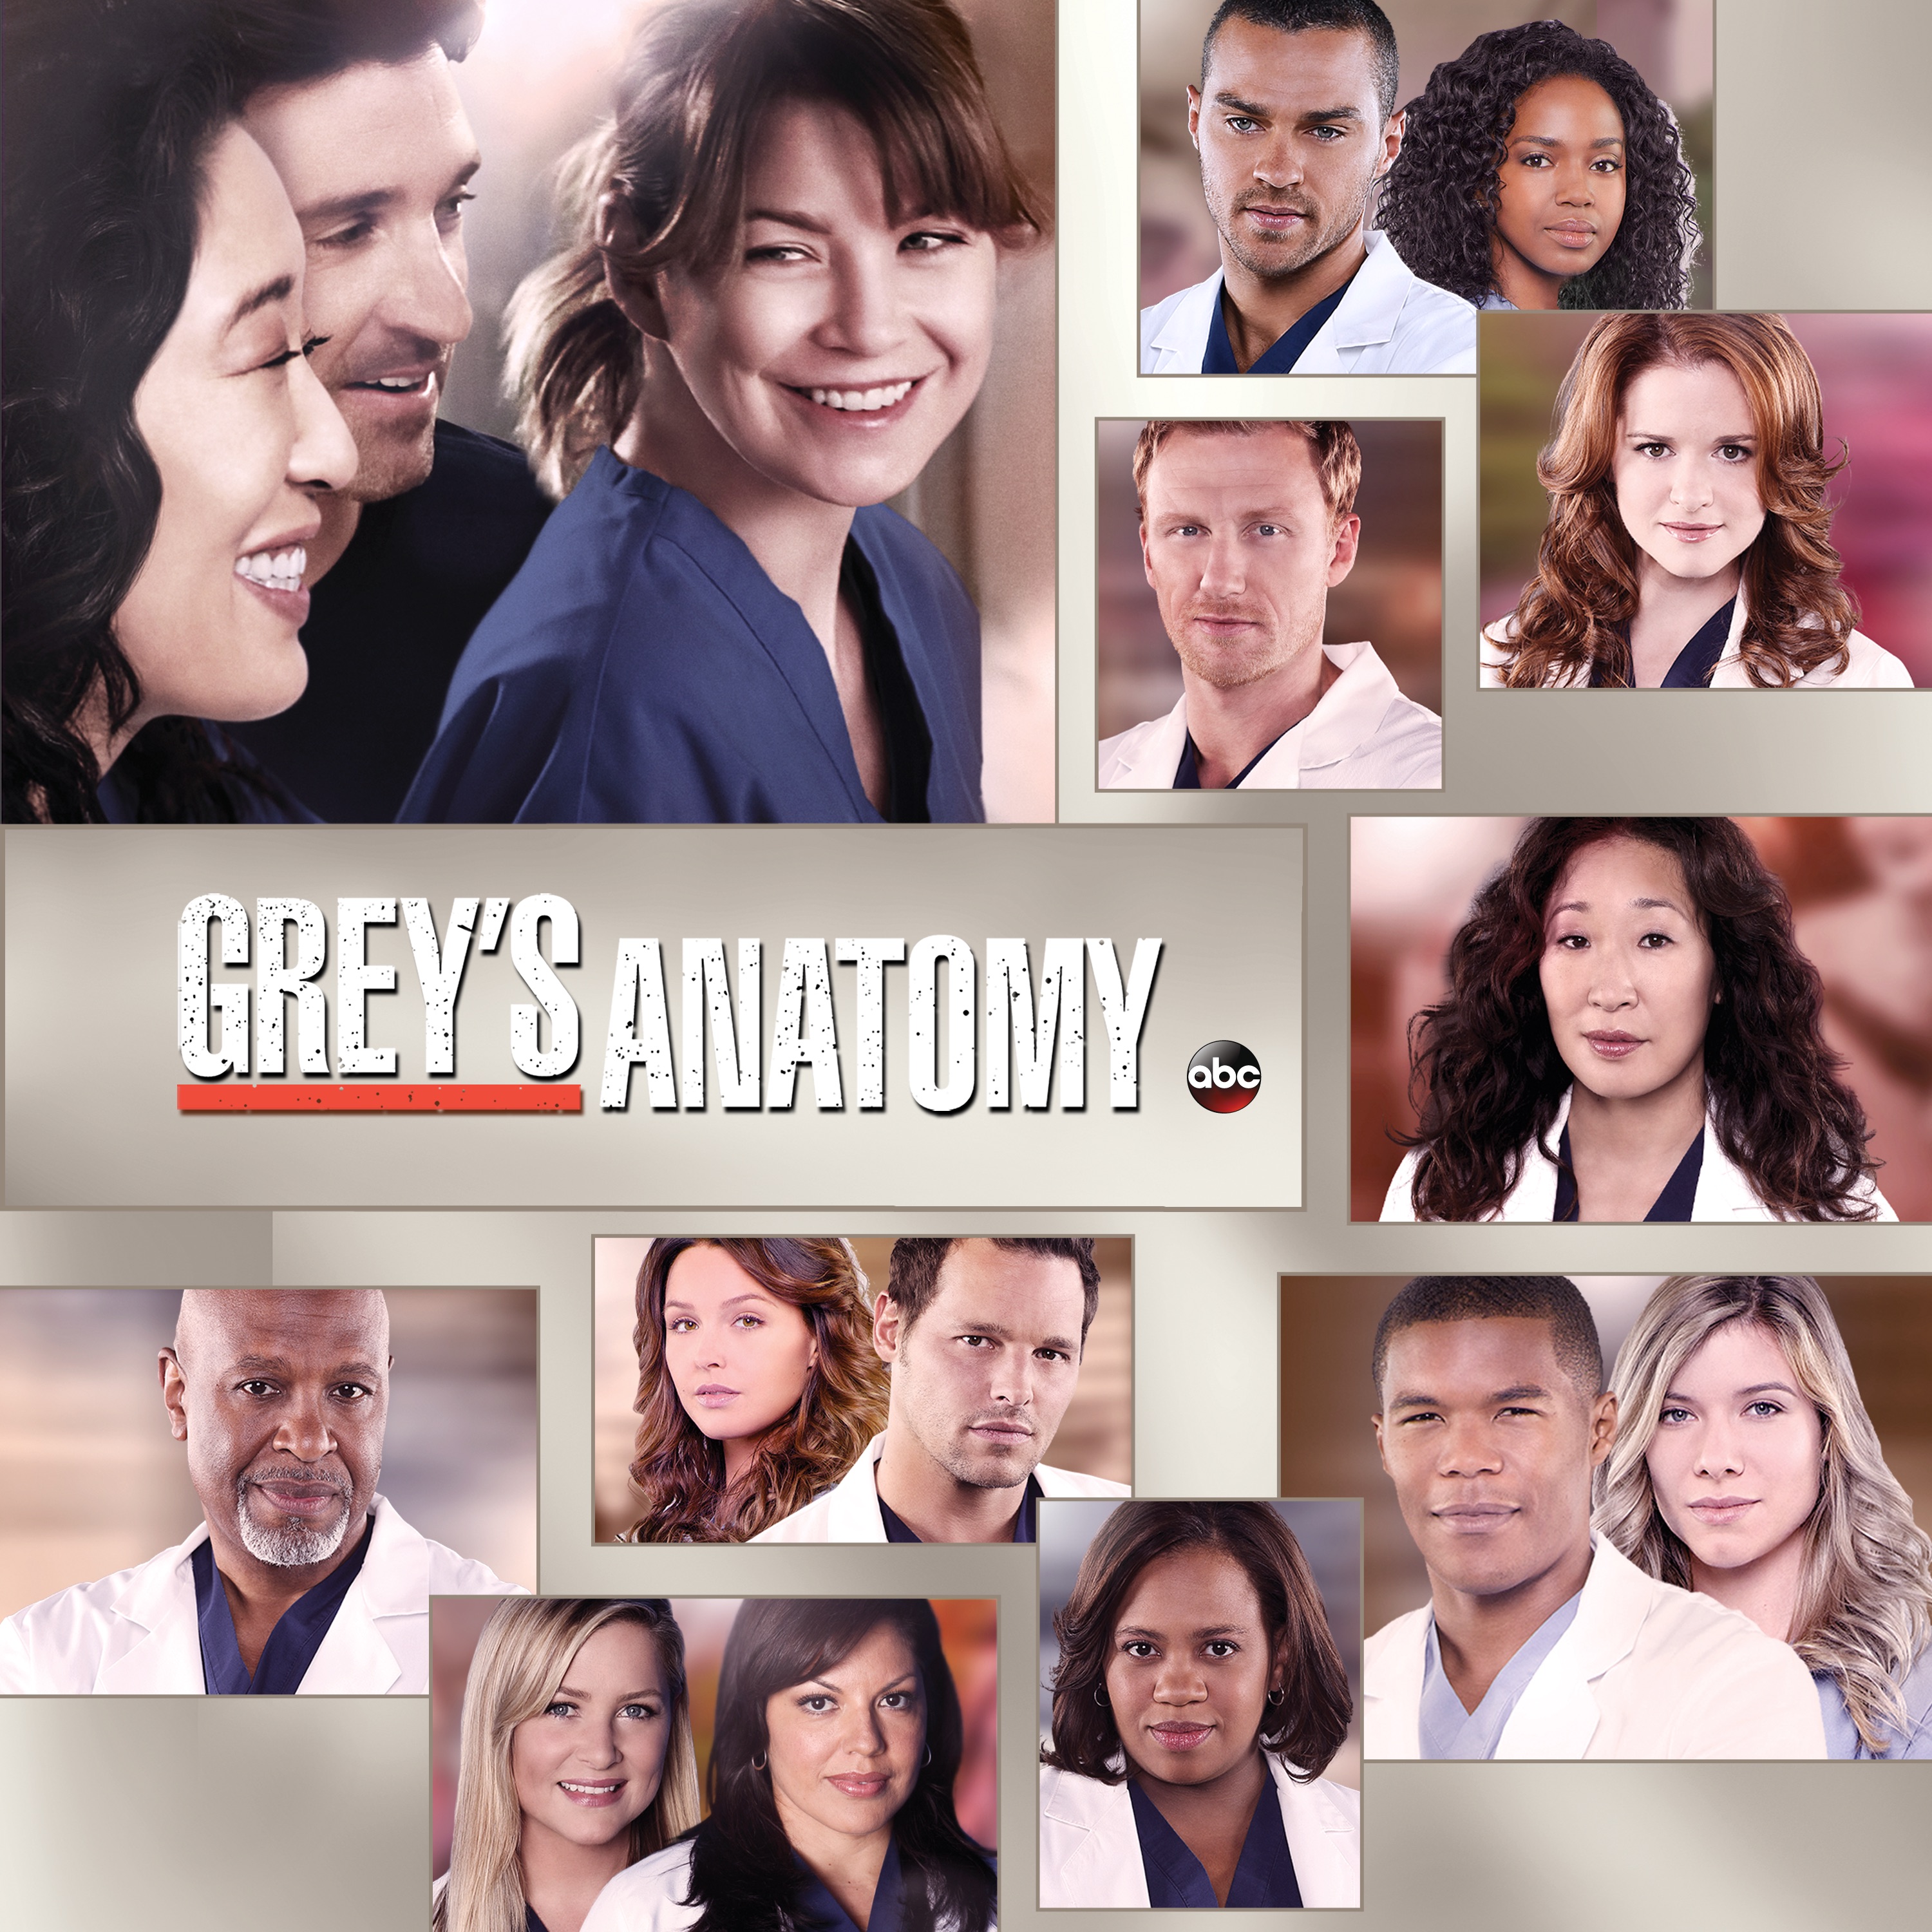 Greys Anatomy season 9 - Wikipedia